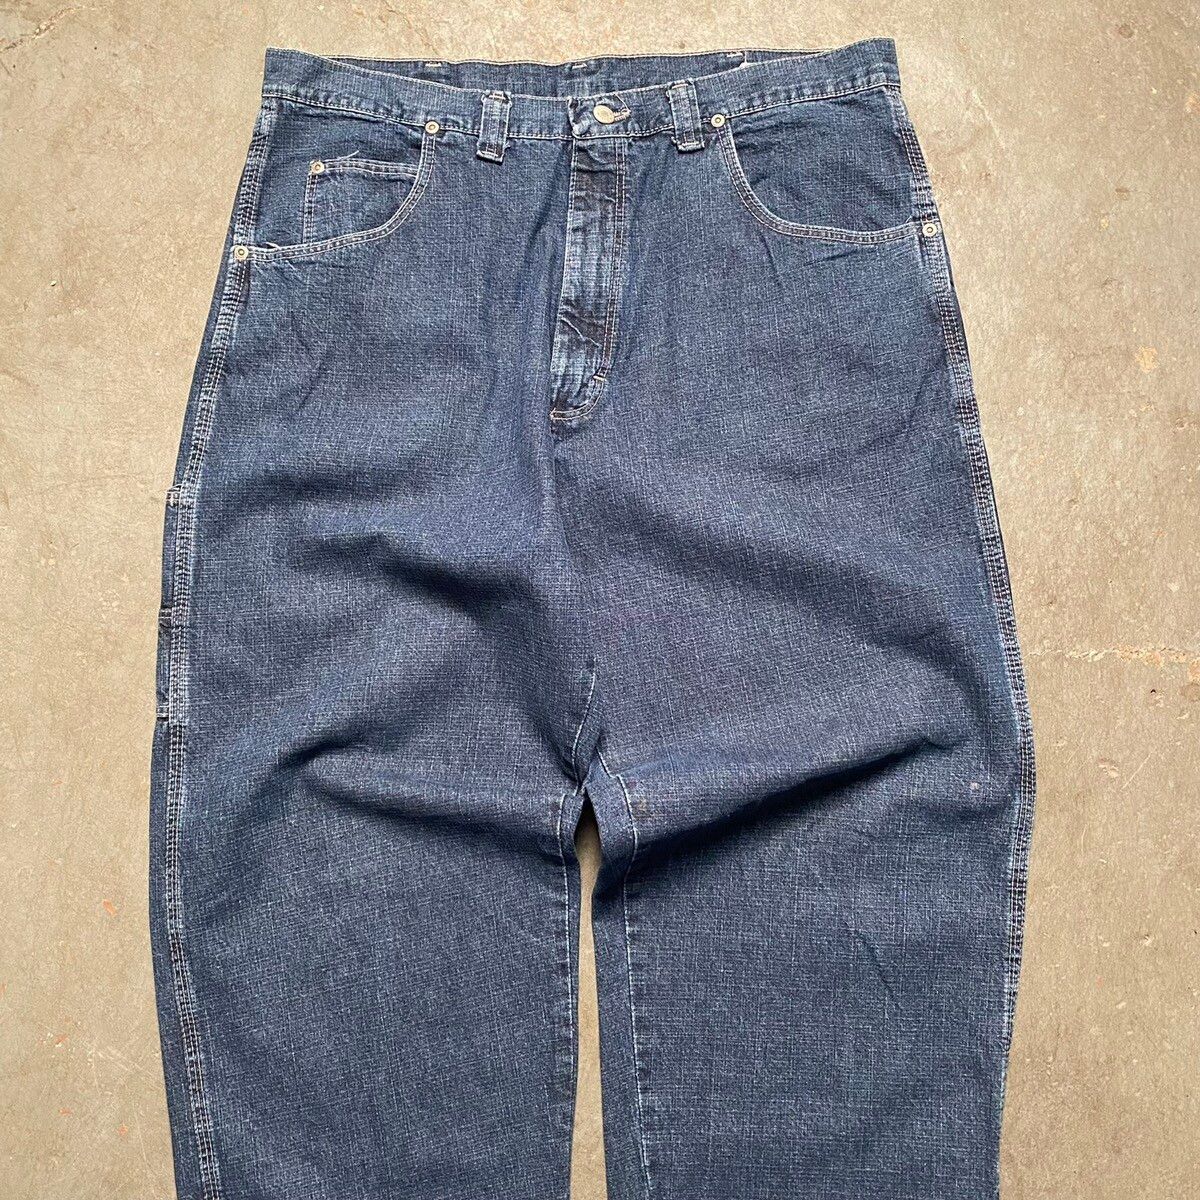 Vintage Vintage 90s Wrangler Baggy Carpenter Jeans Made in Usa Size US 36 / EU 52 - 8 Preview